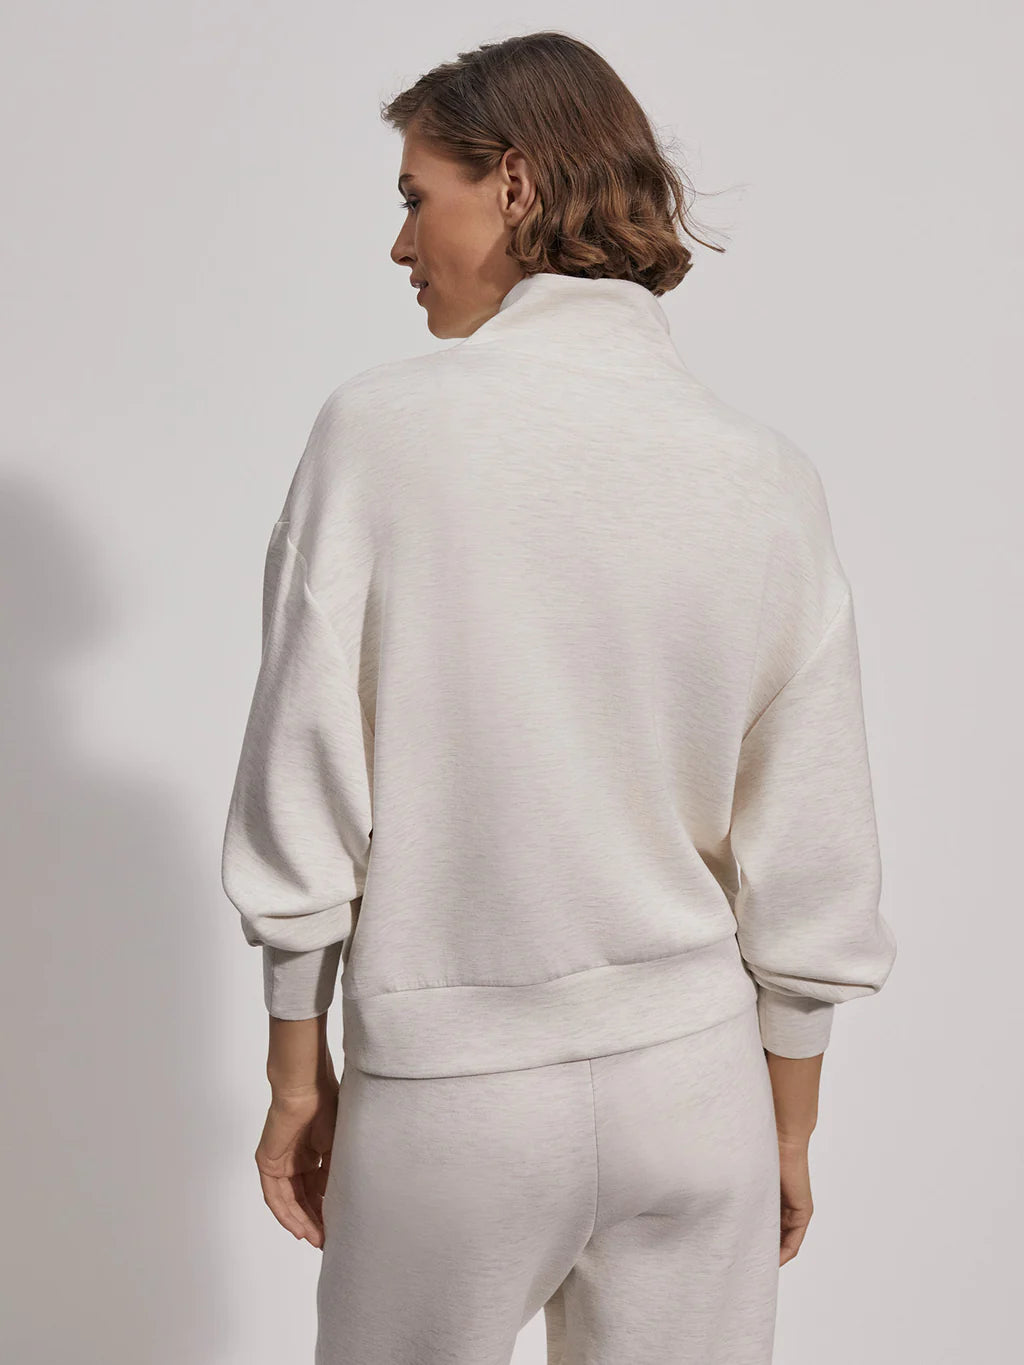 Davidson Ivory Sweater